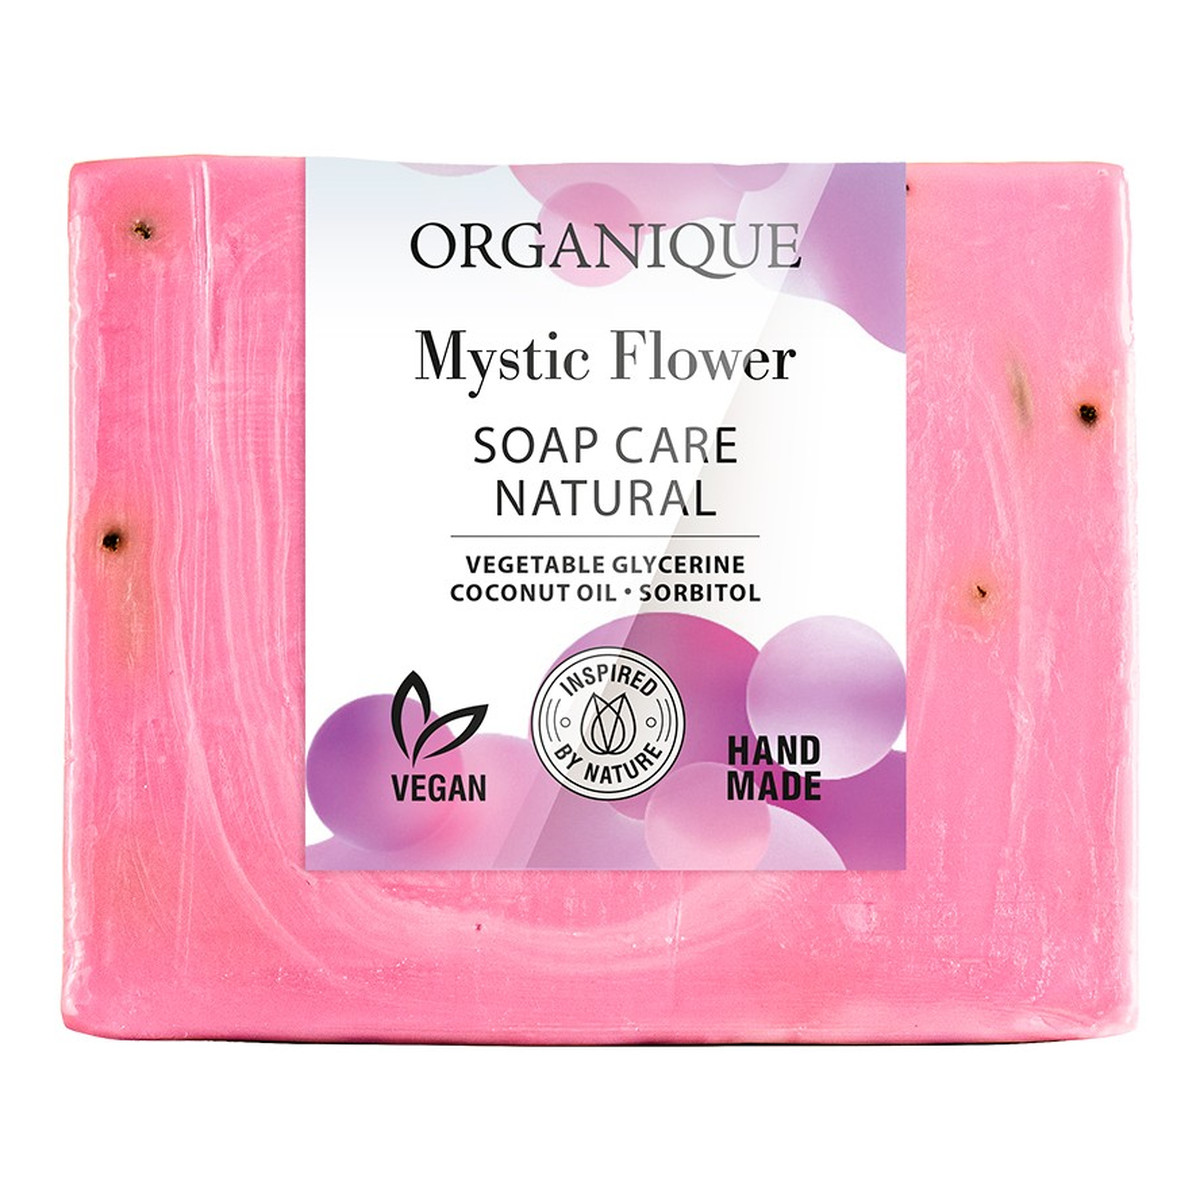 Organique Mydło naturalnie pielęgnujące mystic flower 100g